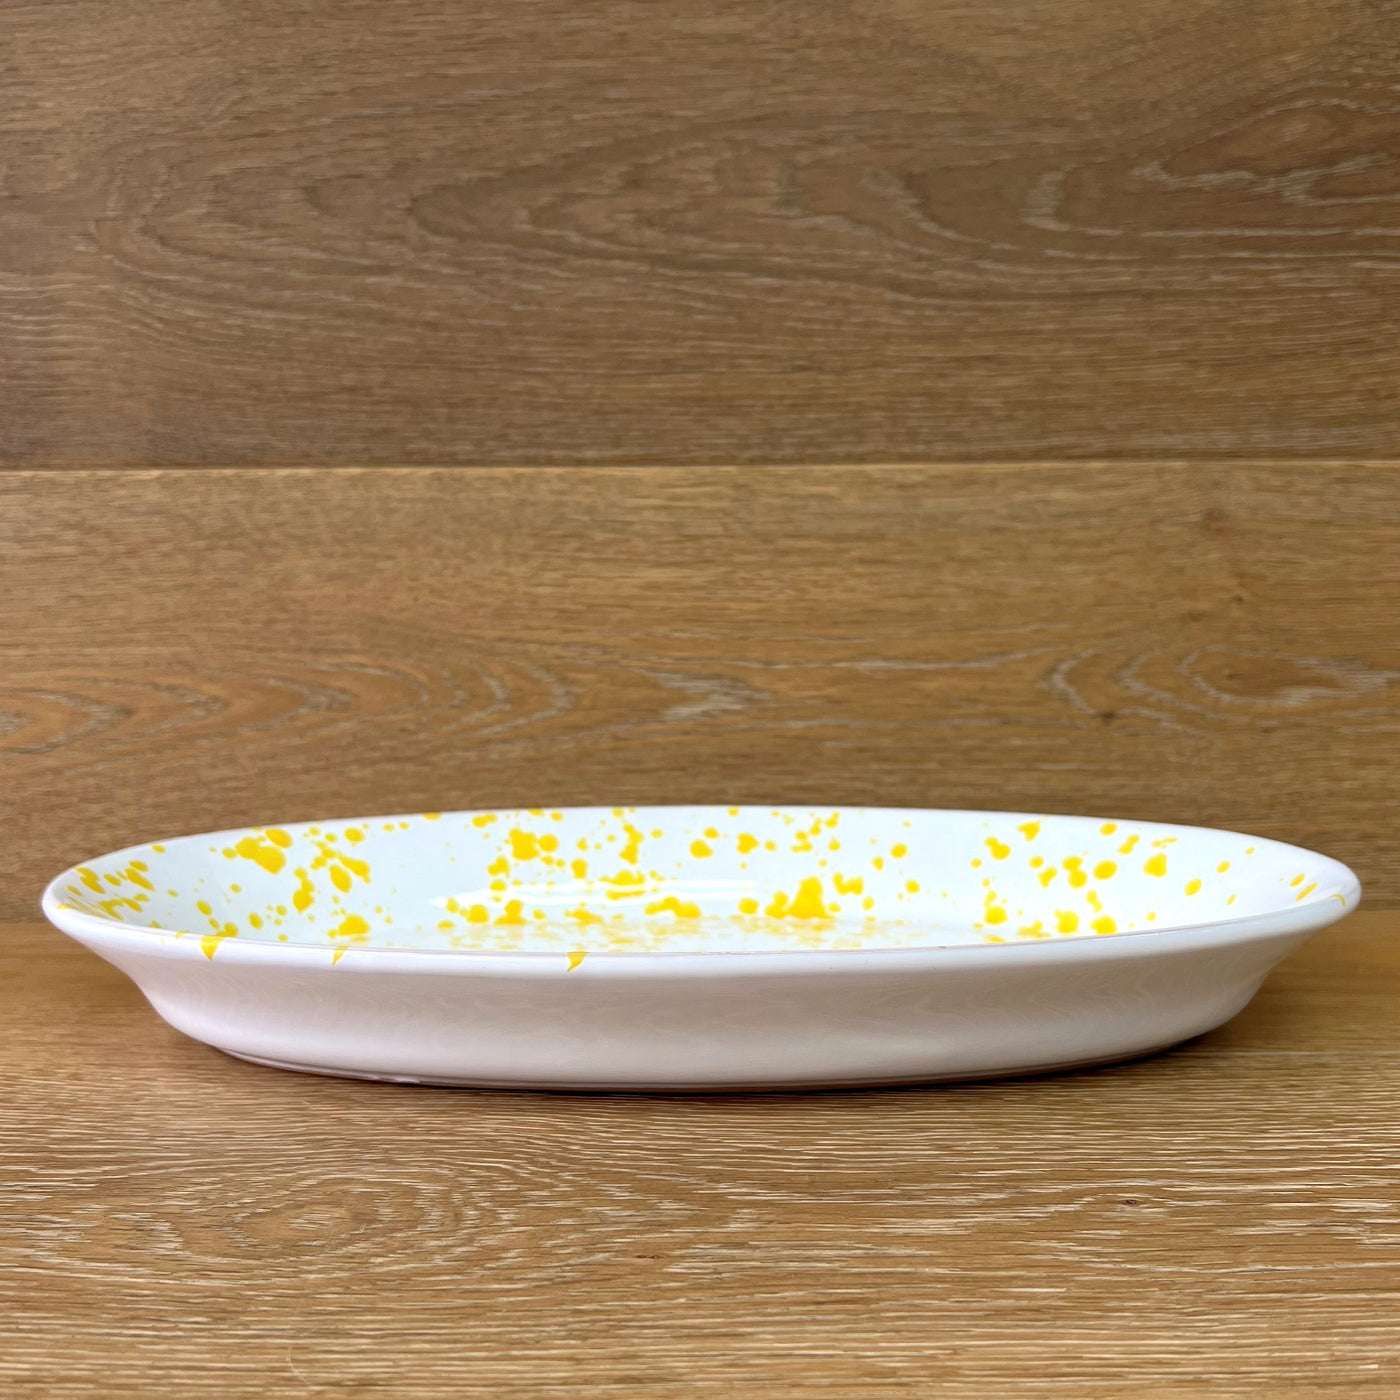 Yellow Oval Platter 38cm